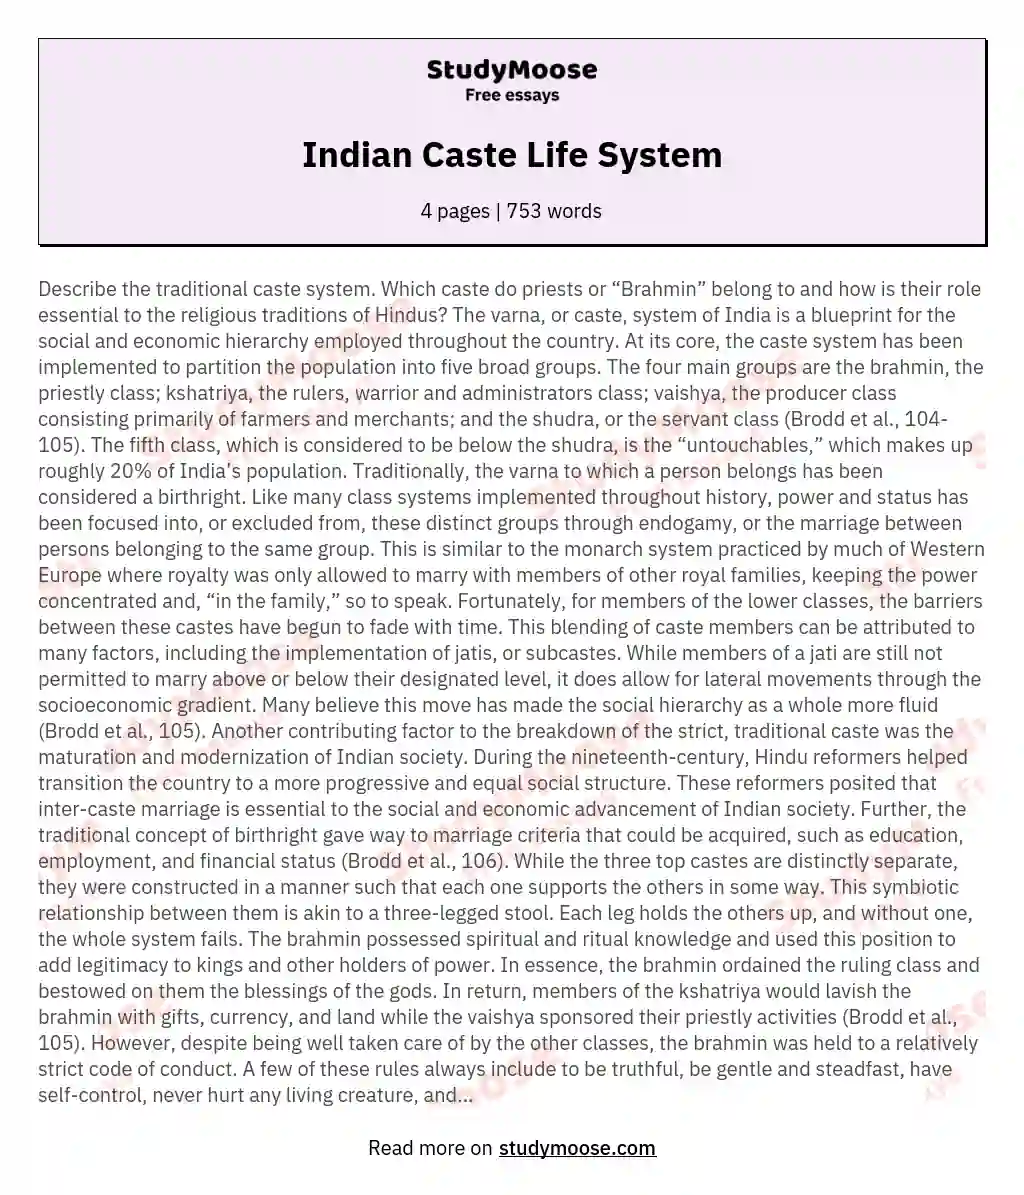 Indian Caste Life System essay